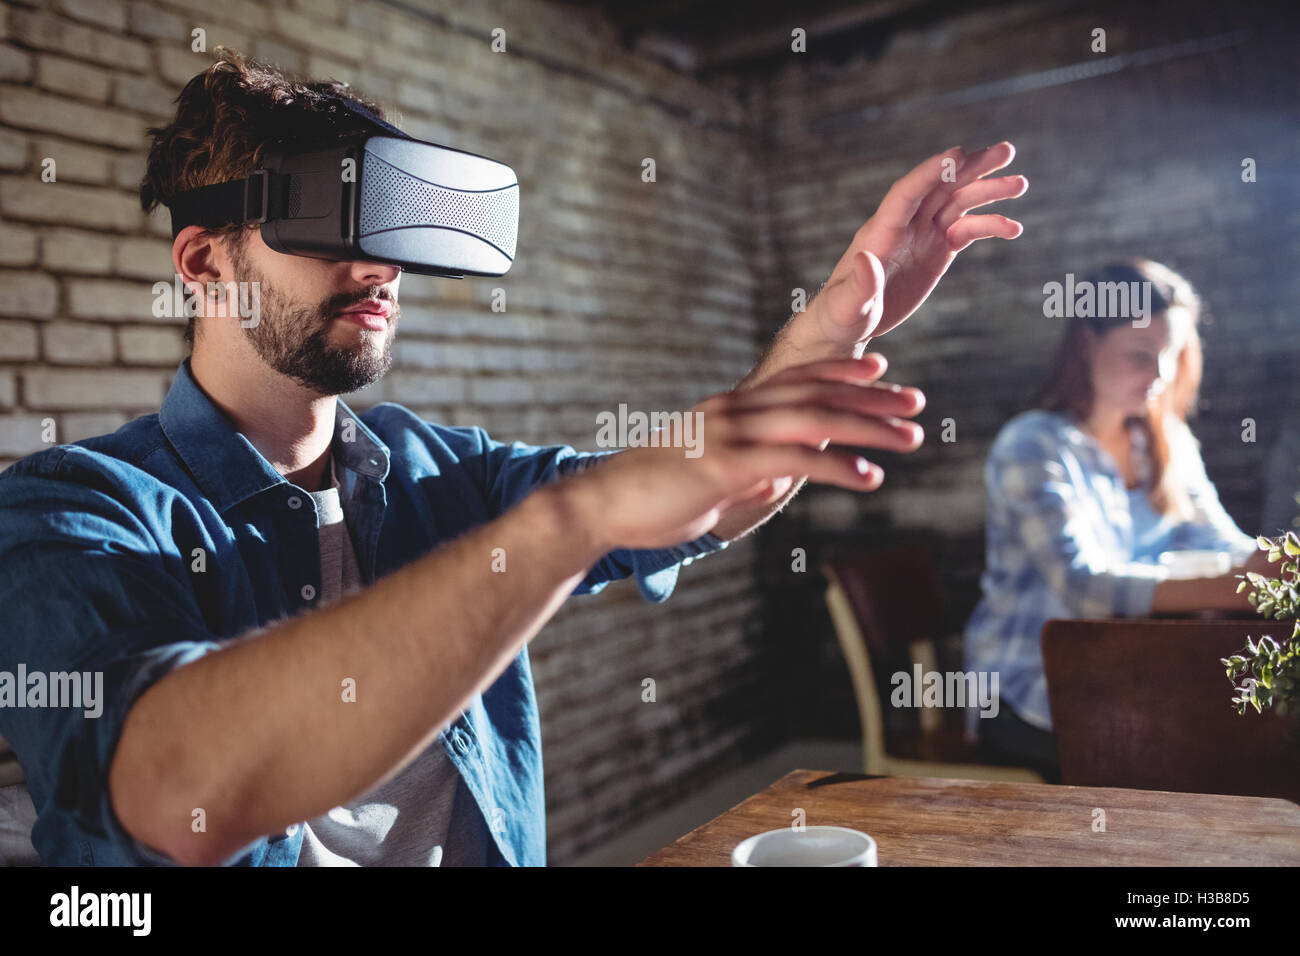 Man enjoying casque virtuel du coffee shop Banque D'Images